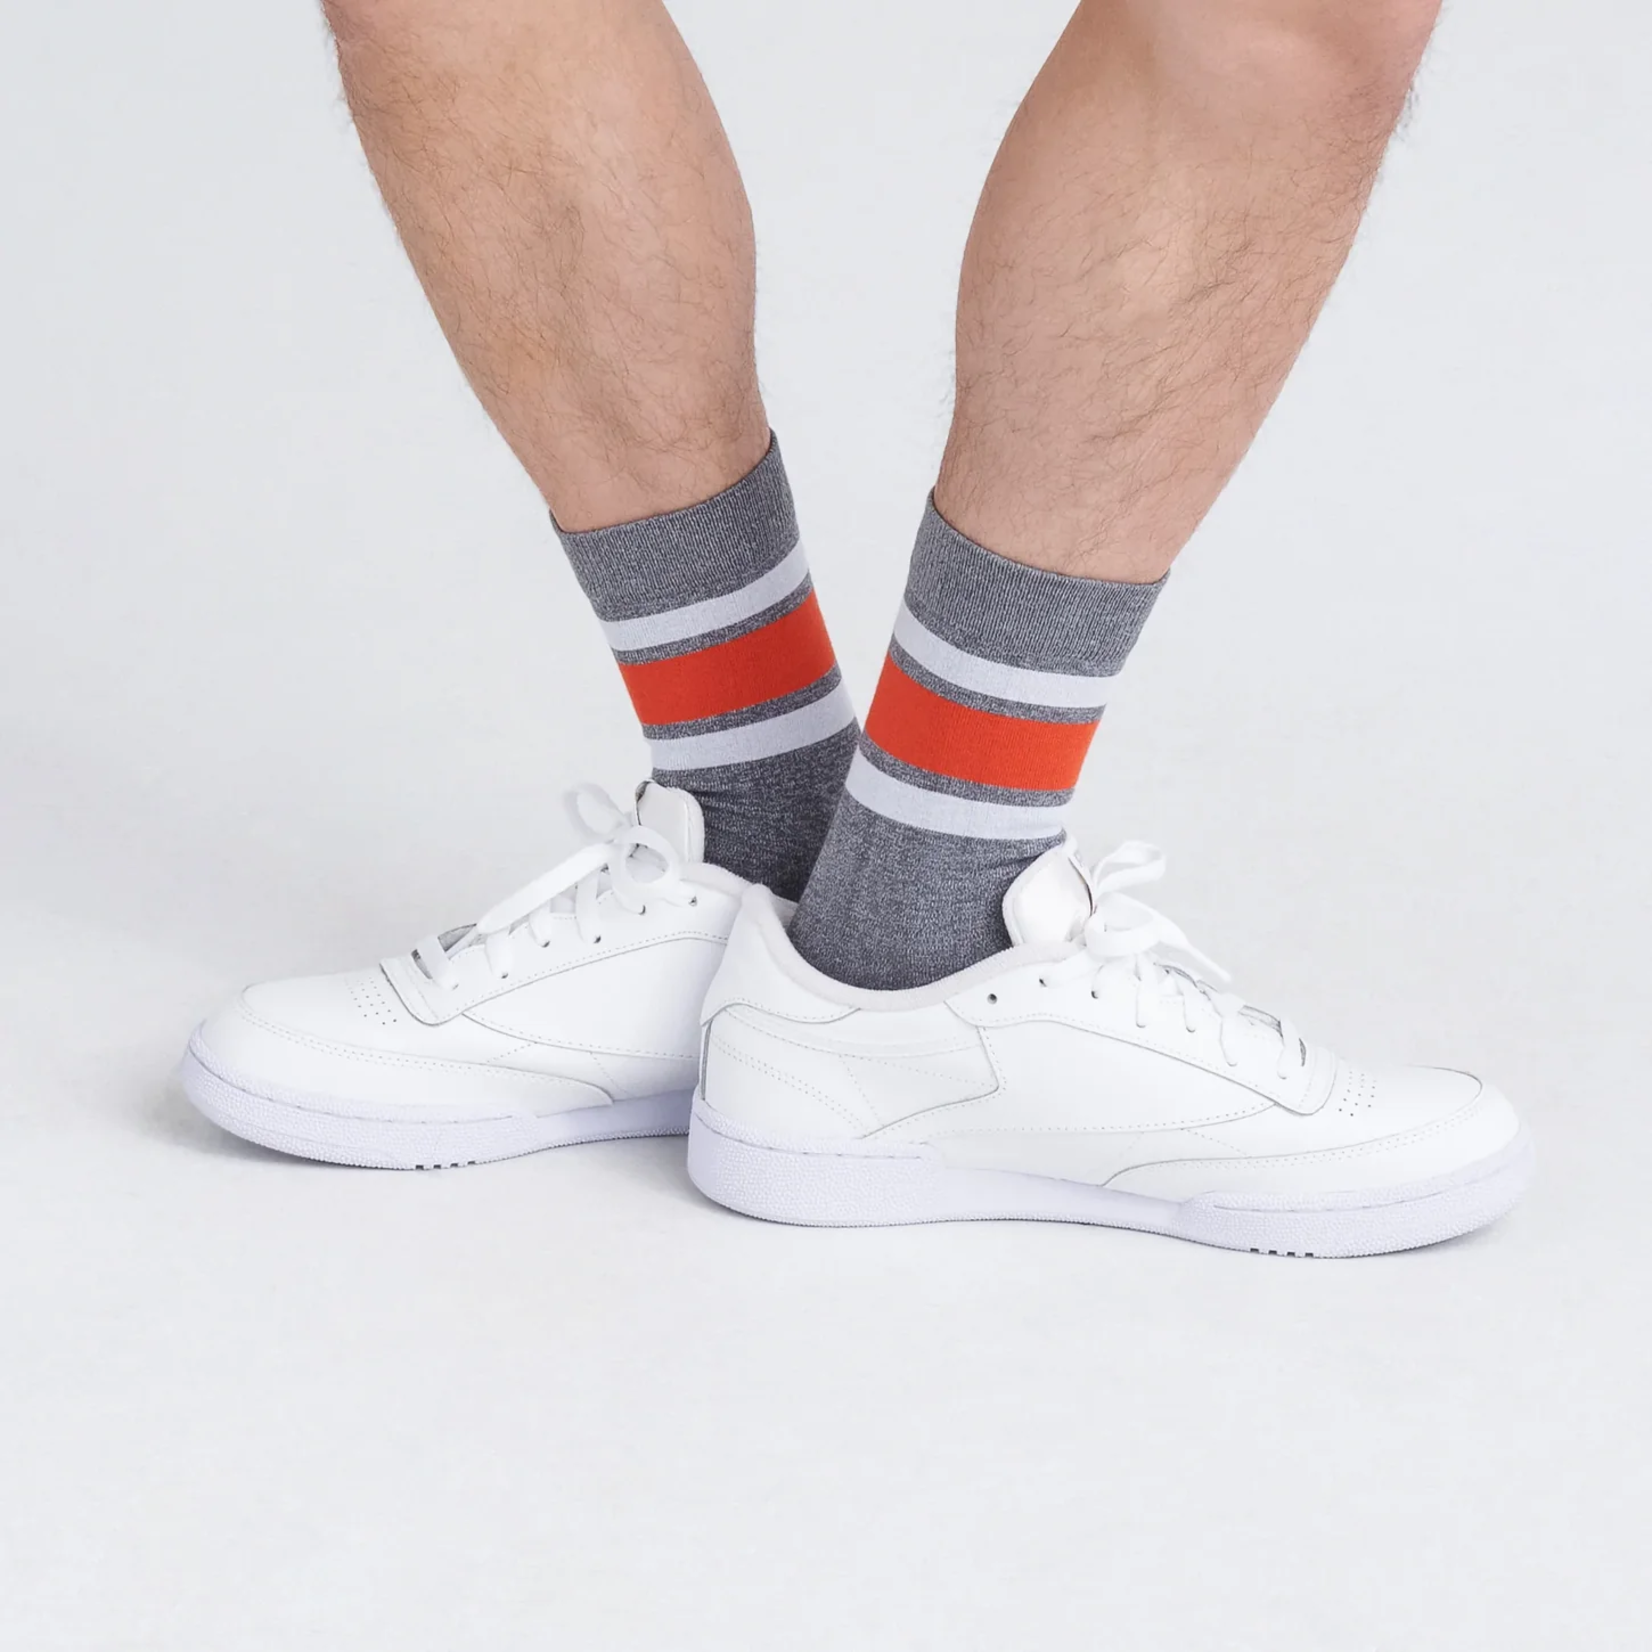 SAXX WHOLE PACKAGE Crew Socks / Athletic Stripe- Grey